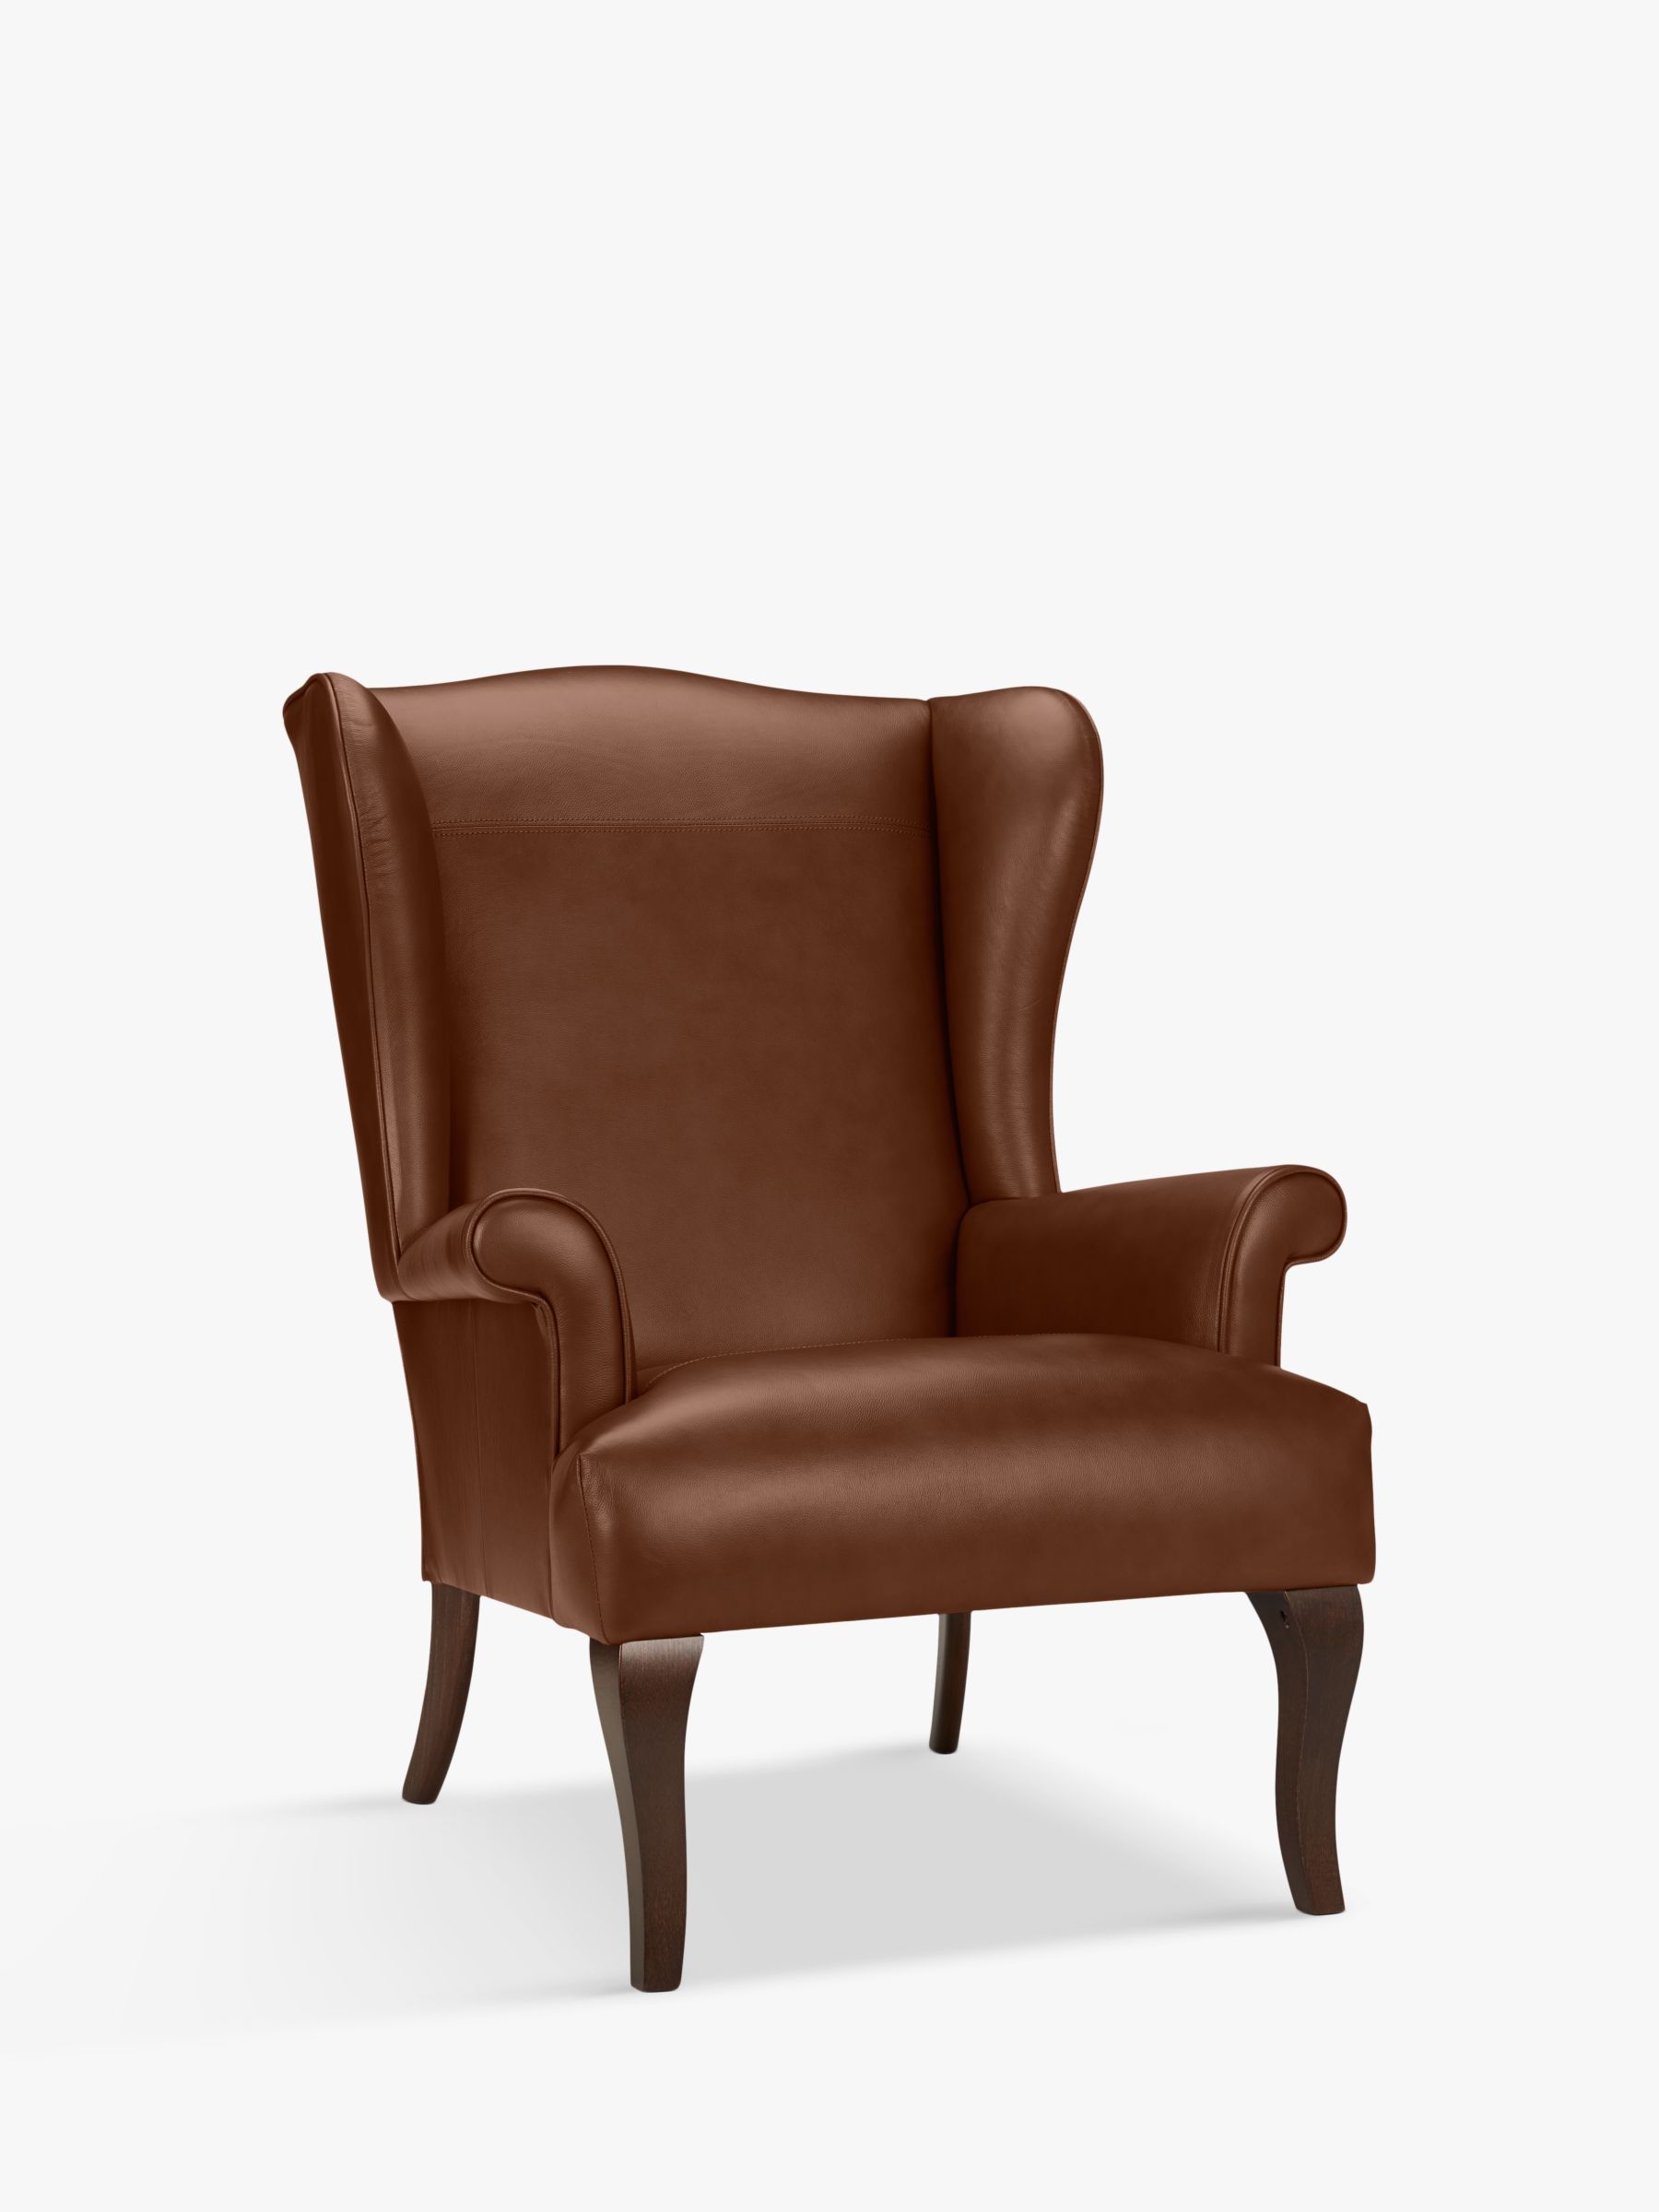 Shaftesbury Range, John Lewis Shaftesbury Leather Wing Chair, Dark Leg, Contempo Castanga